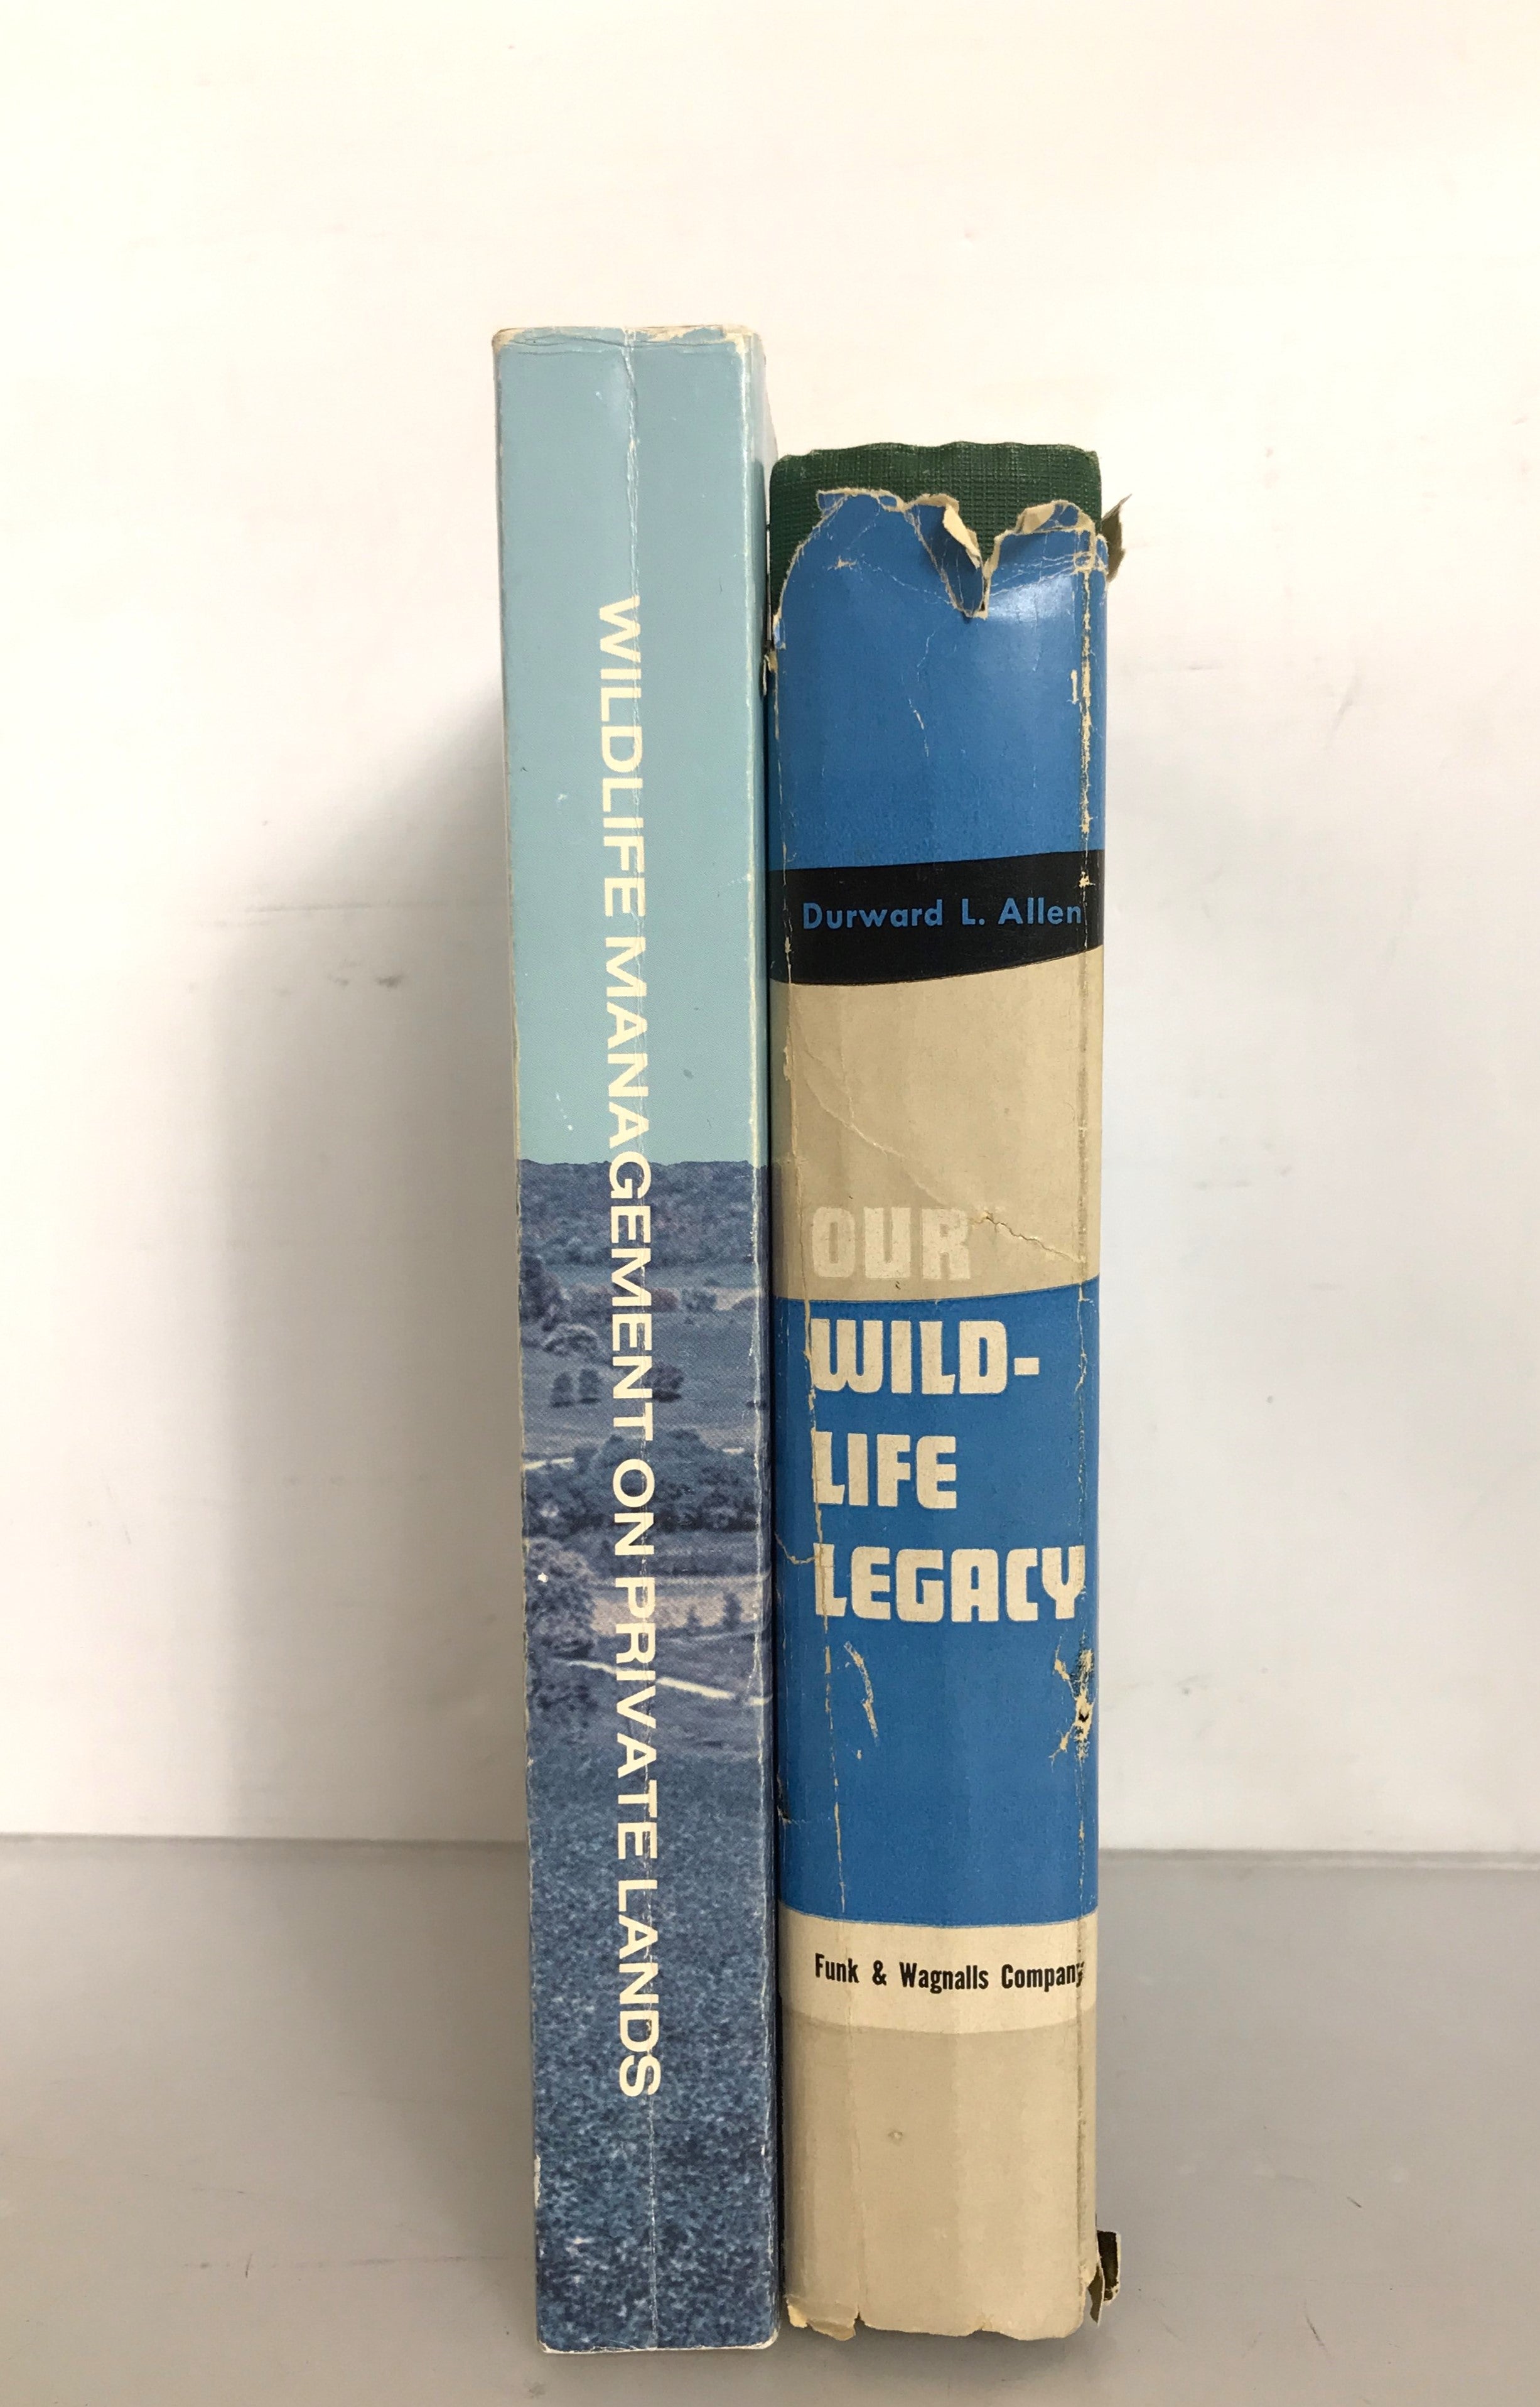 Lot of 2 Wildlife Management and Legacy Books 1954, 1981 HC SC DJ